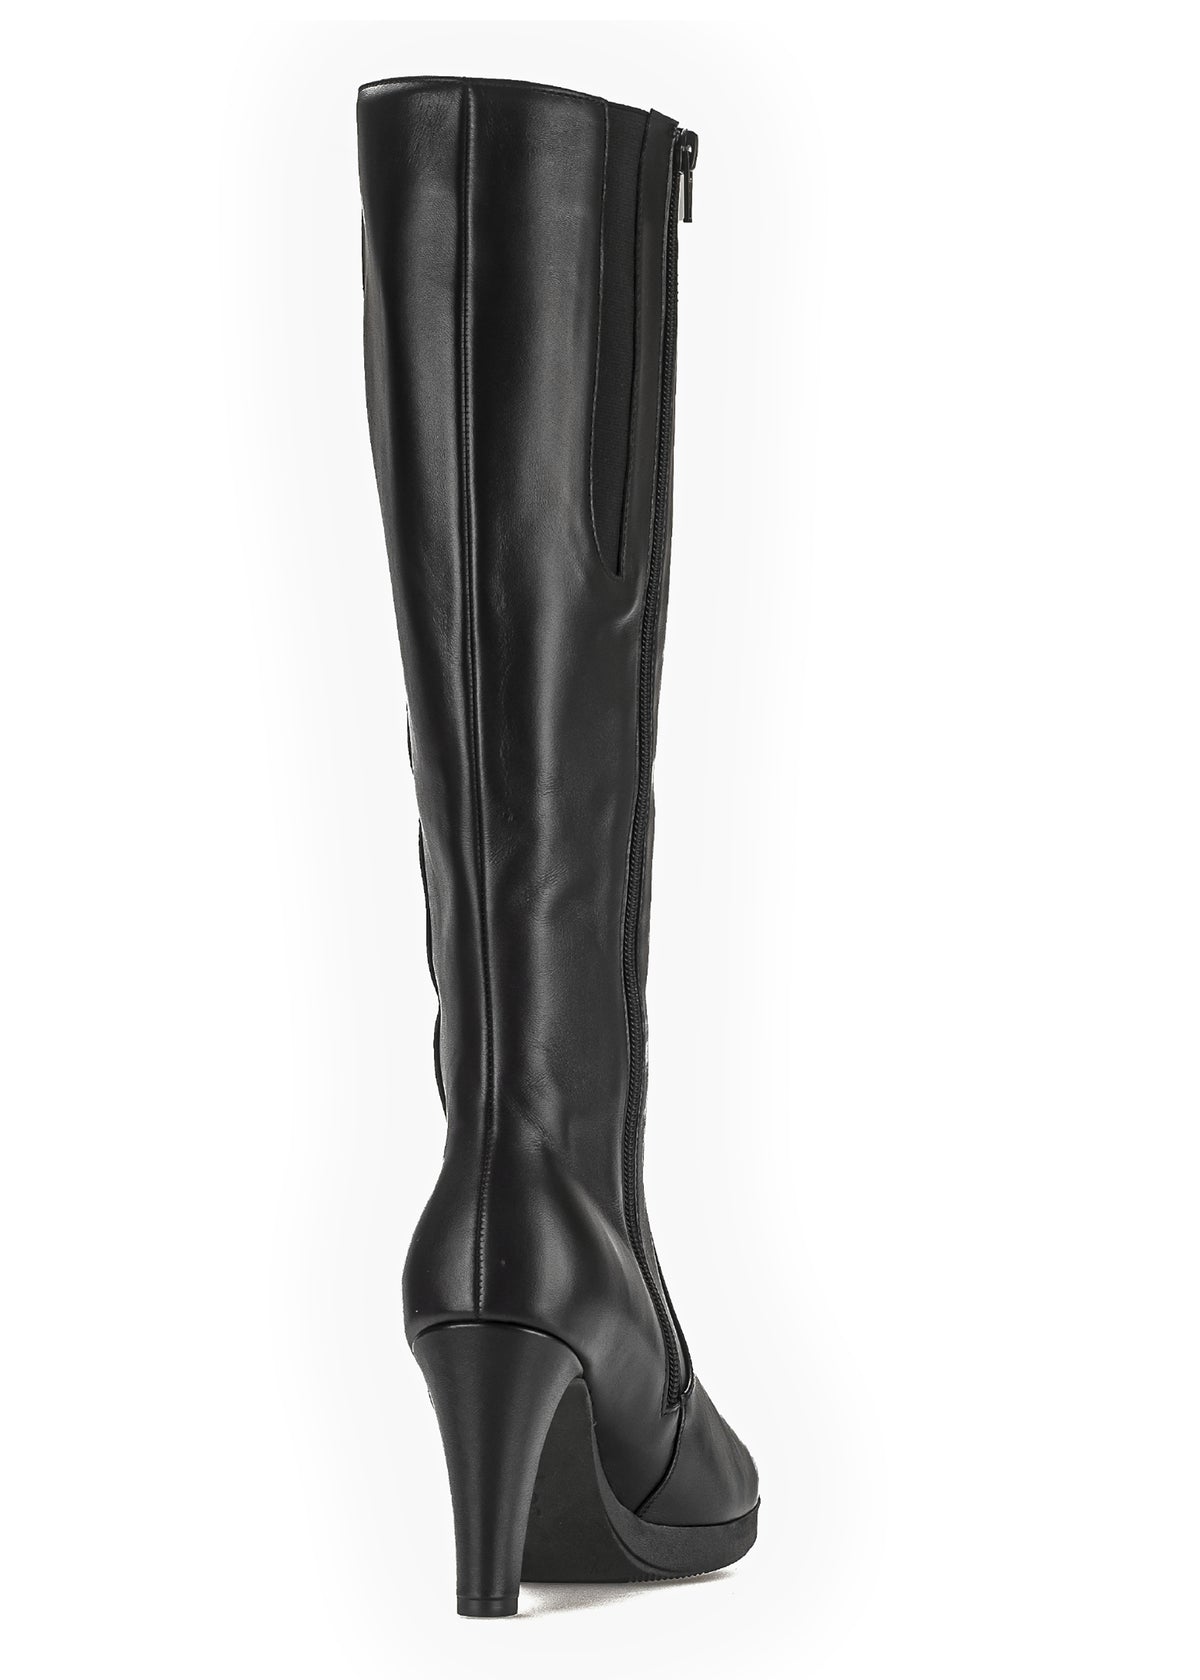 Boots with stiletto heel - black, M shaft